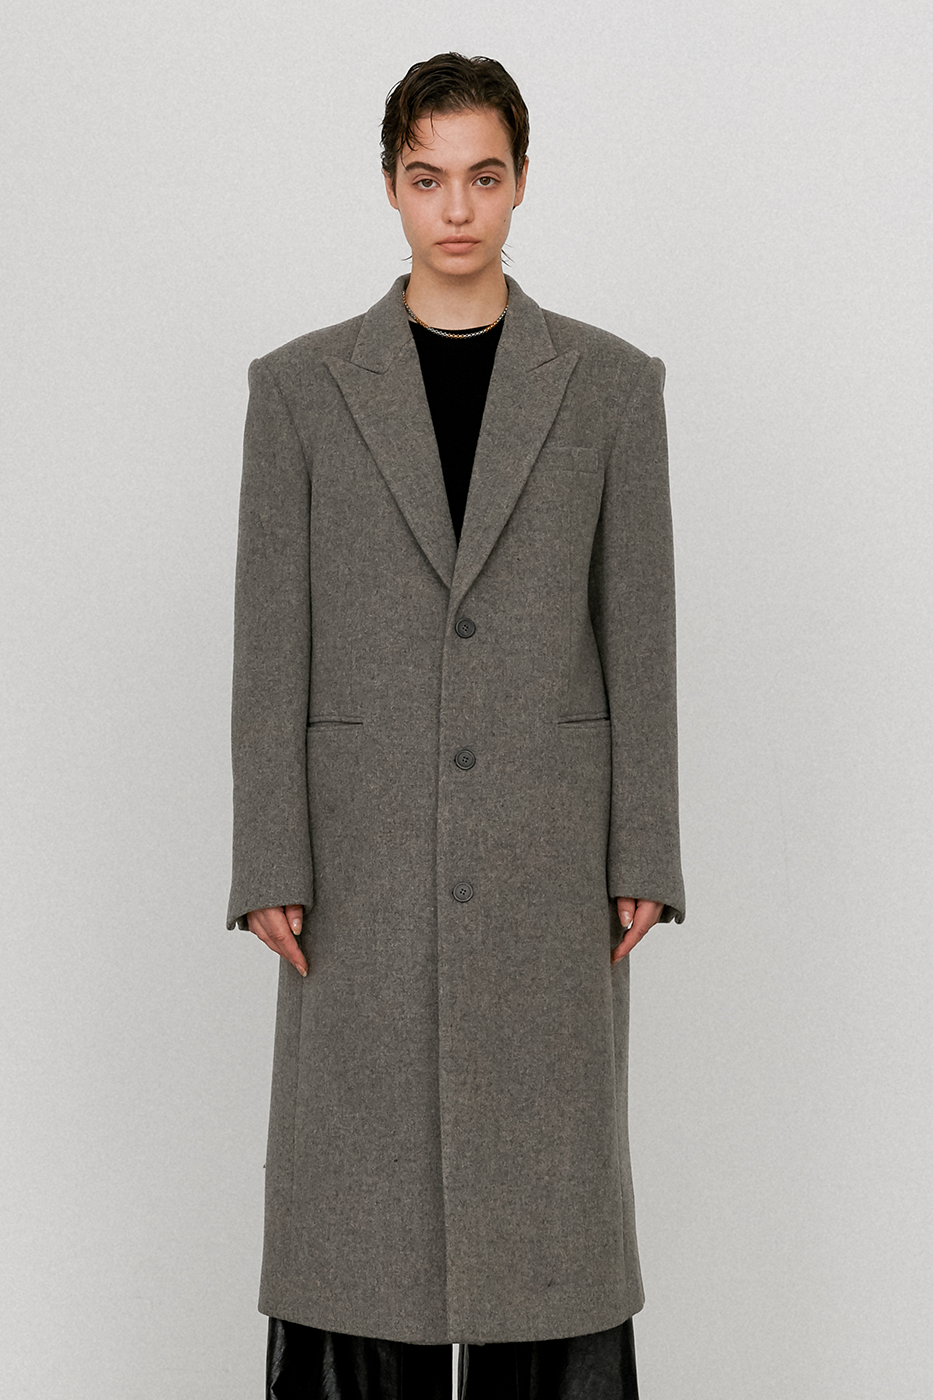 Single 3button coat